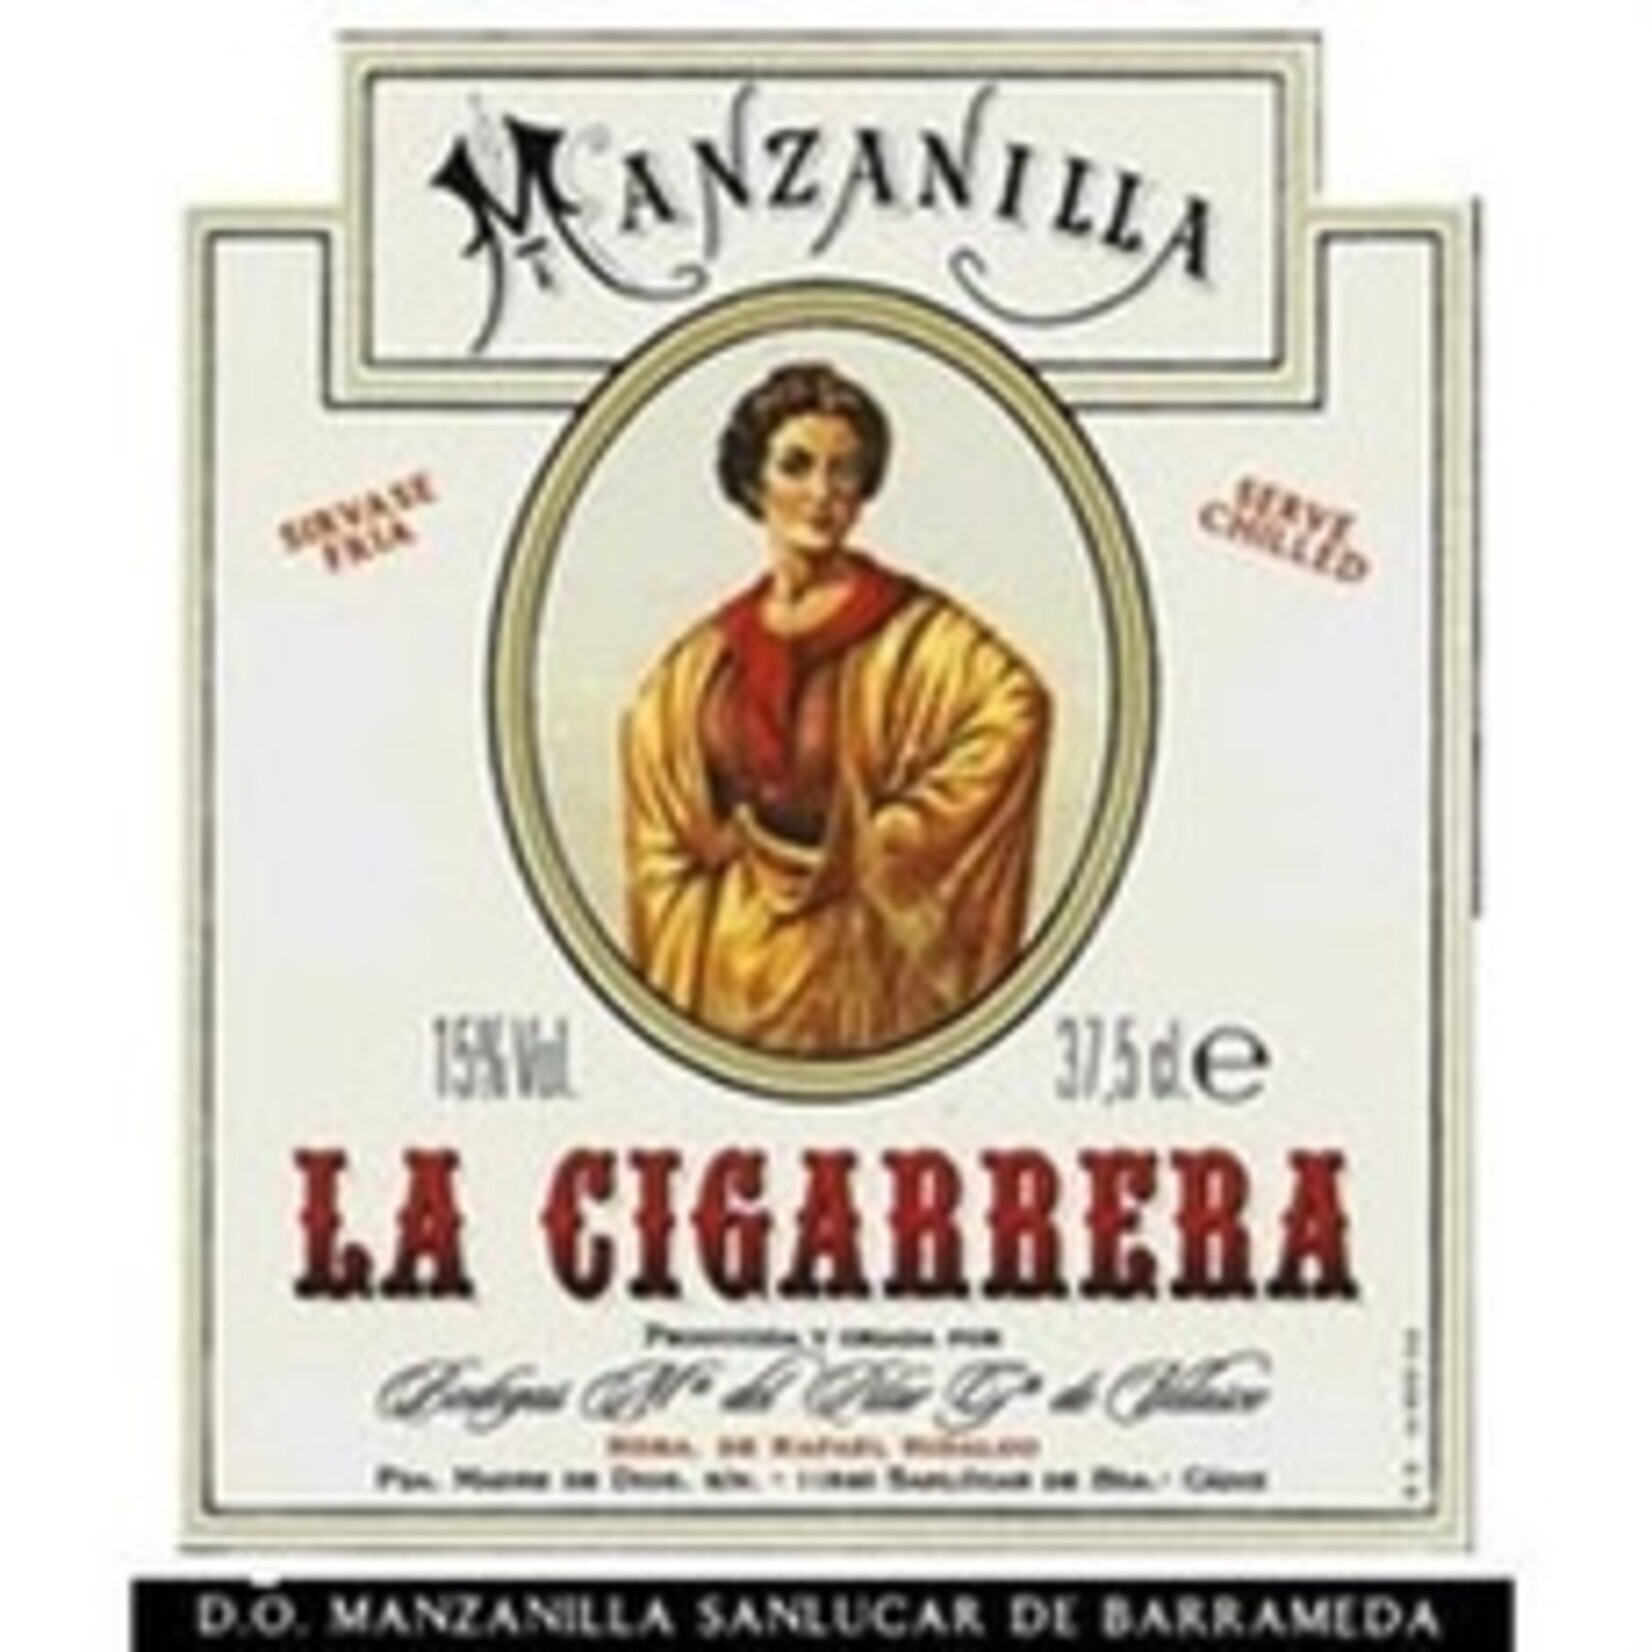 Spain La Cigarrera Manzanilla